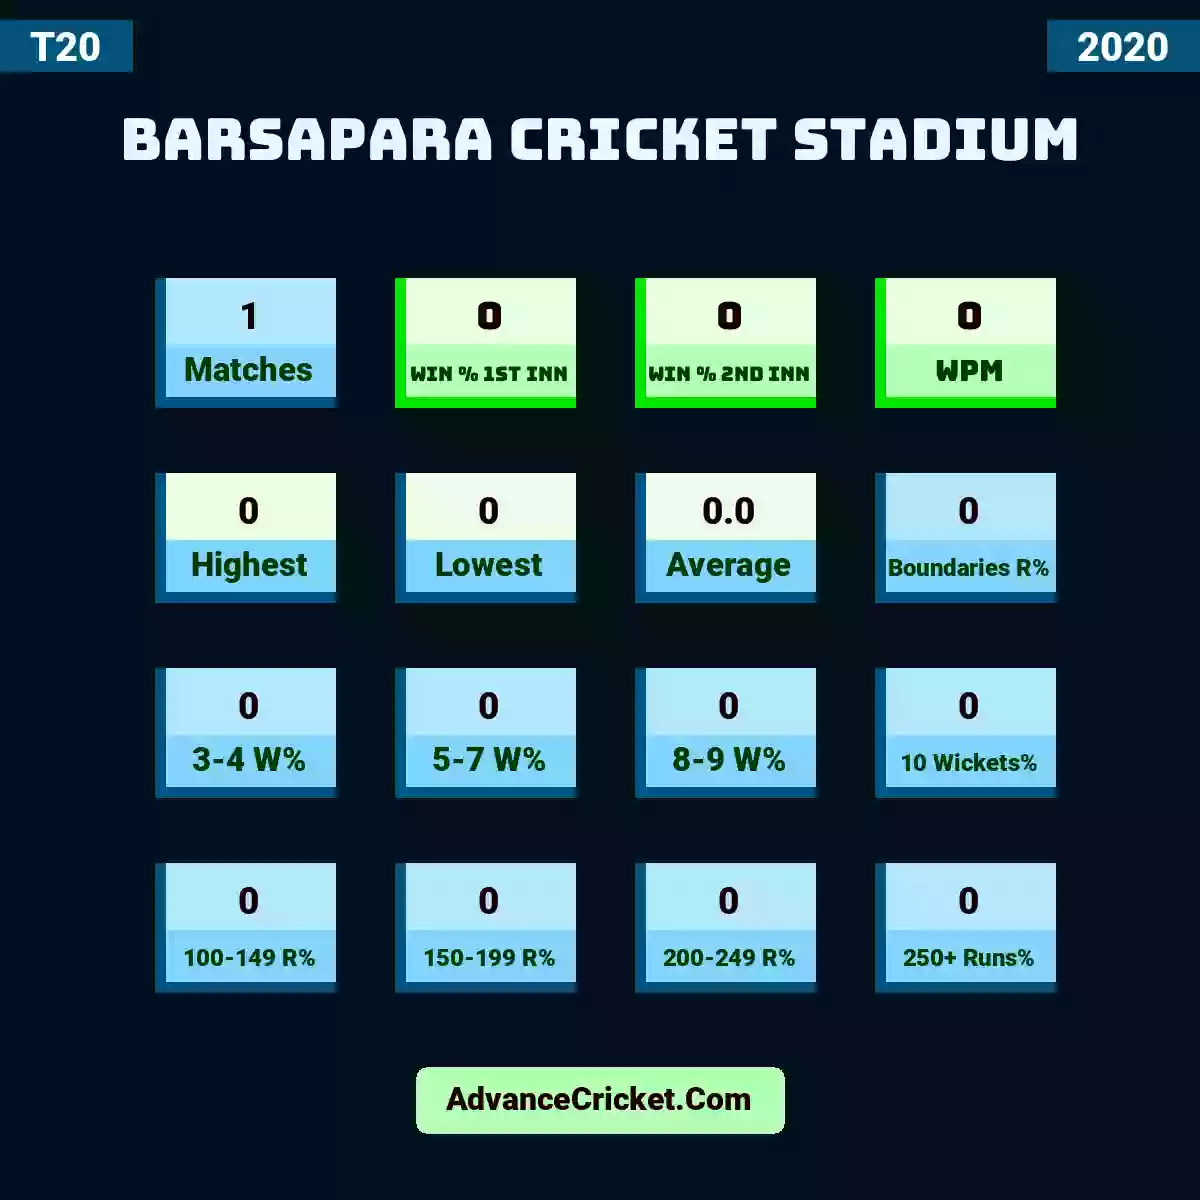 Image showing Barsapara Cricket Stadium with Matches: 1, Win % 1st Inn: 0, Win % 2nd Inn: 0, WPM: 0, Highest: 0, Lowest: 0, Average: 0.0, Boundaries R%: 0, 3-4 W%: 0, 5-7 W%: 0, 8-9 W%: 0, 10 Wickets%: 0, 100-149 R%: 0, 150-199 R%: 0, 200-249 R%: 0, 250+ Runs%: 0.